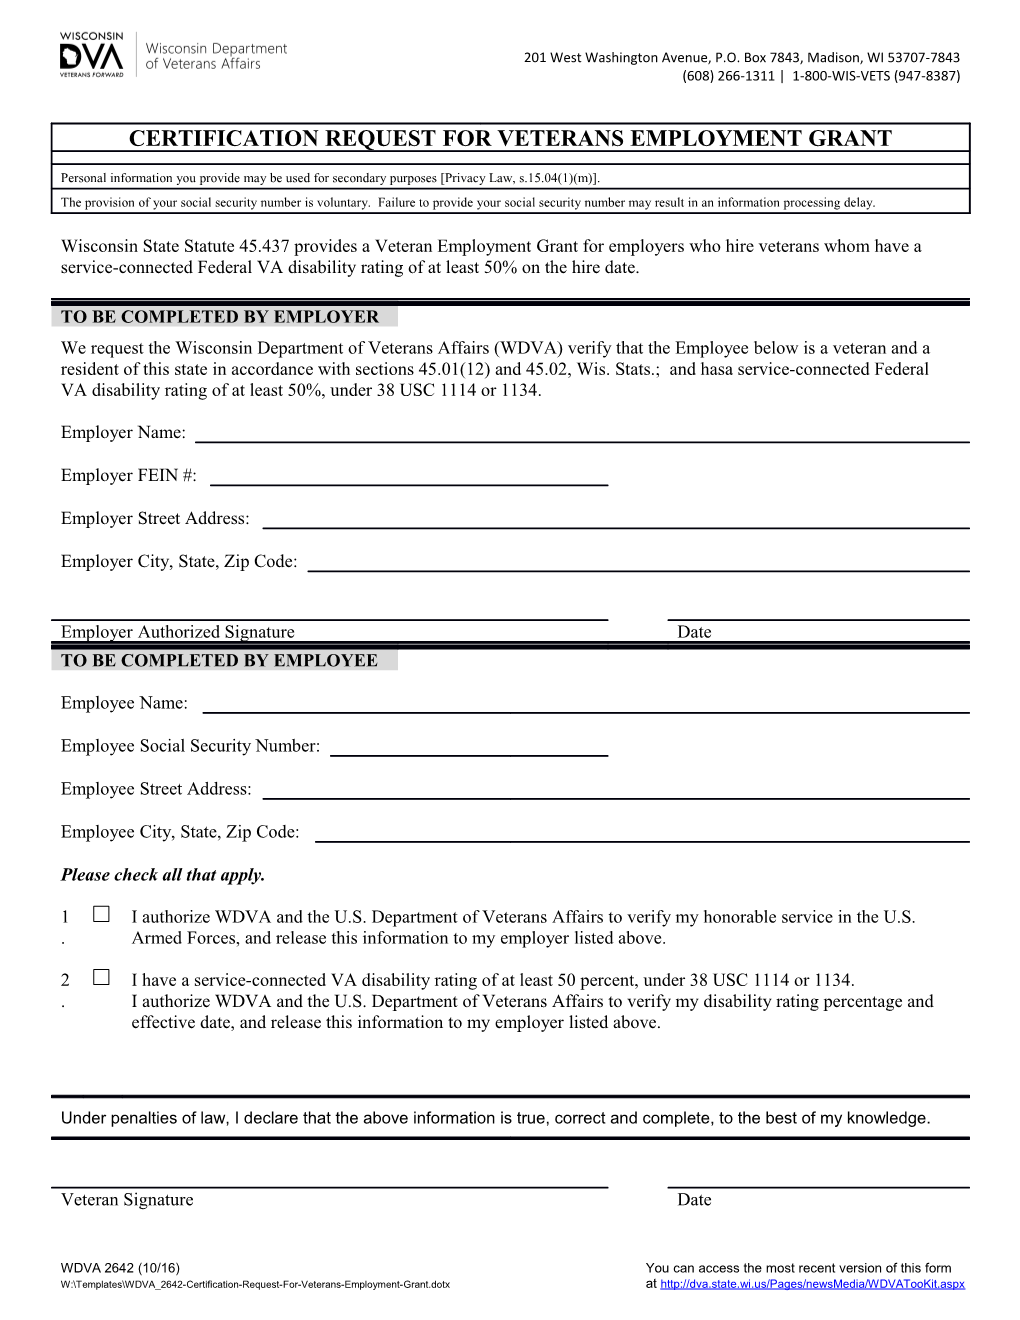 WDVA 2642 Certification Request for Veterans Employment Grant